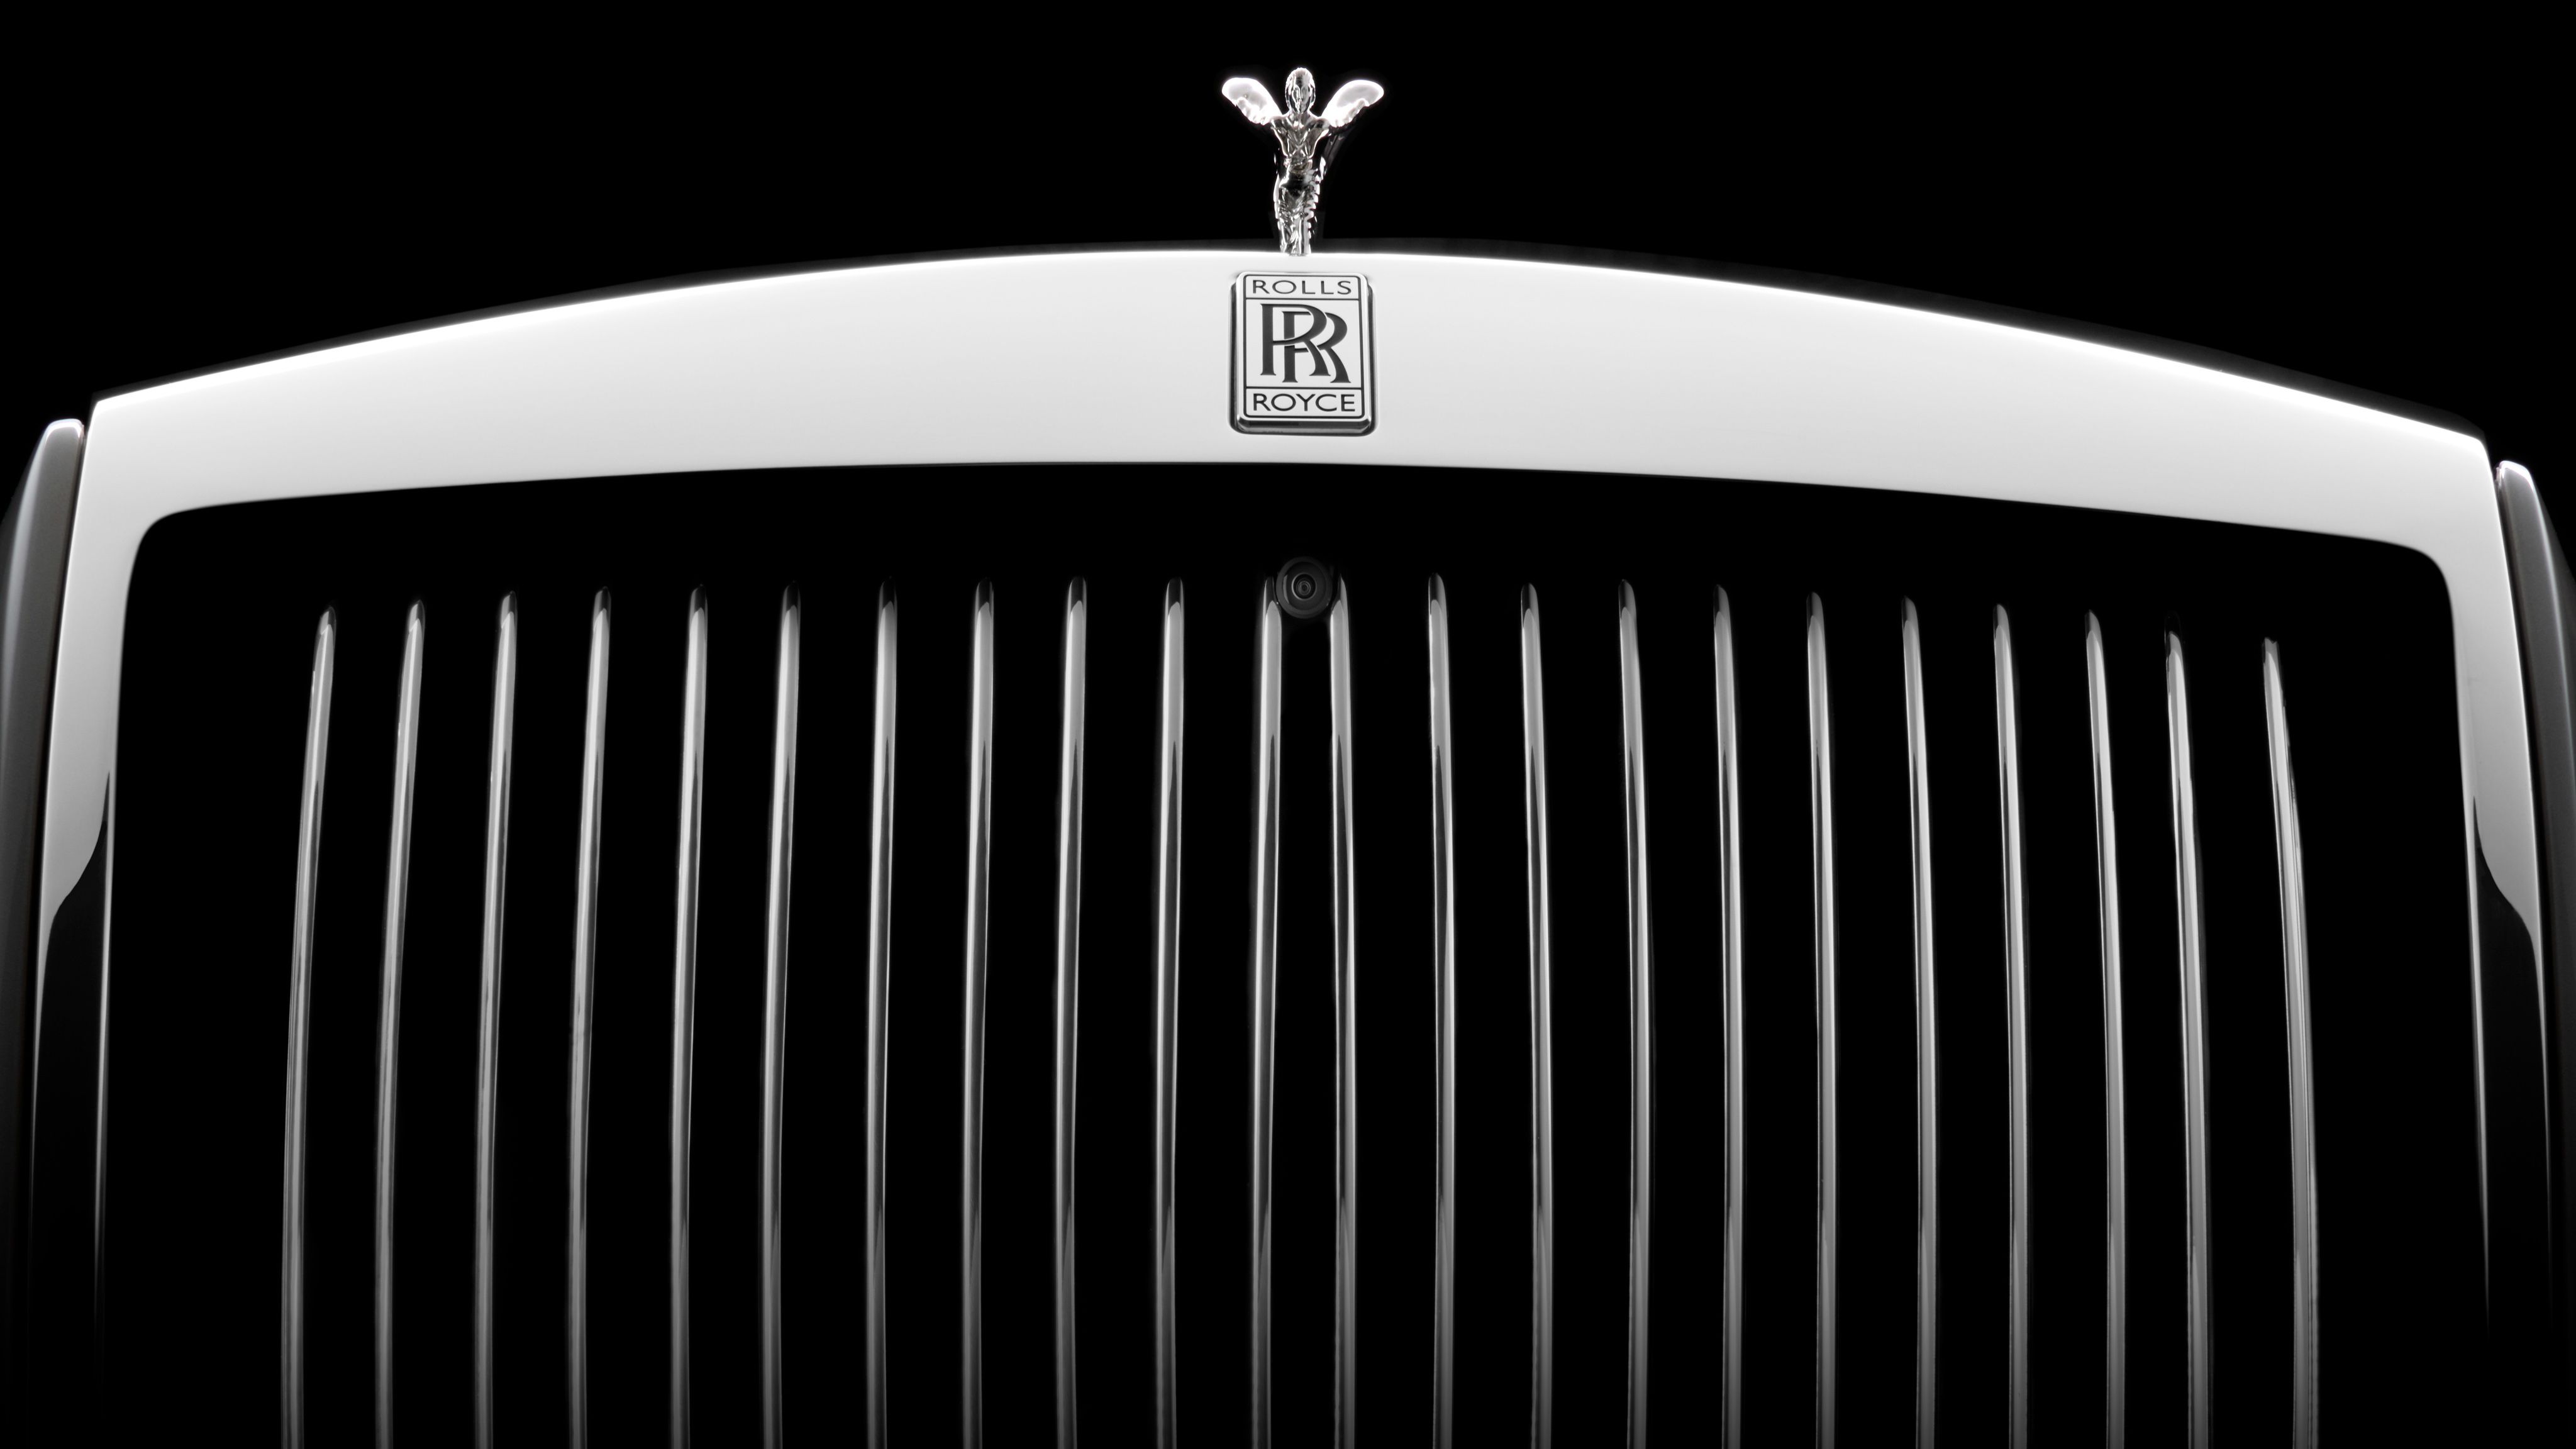 Wallpaper Rolls Royce Phantom, Logo, Emblem, 4K, Automotive / Cars,. Wallpaper for iPhone, Android, Mobile and Desktop